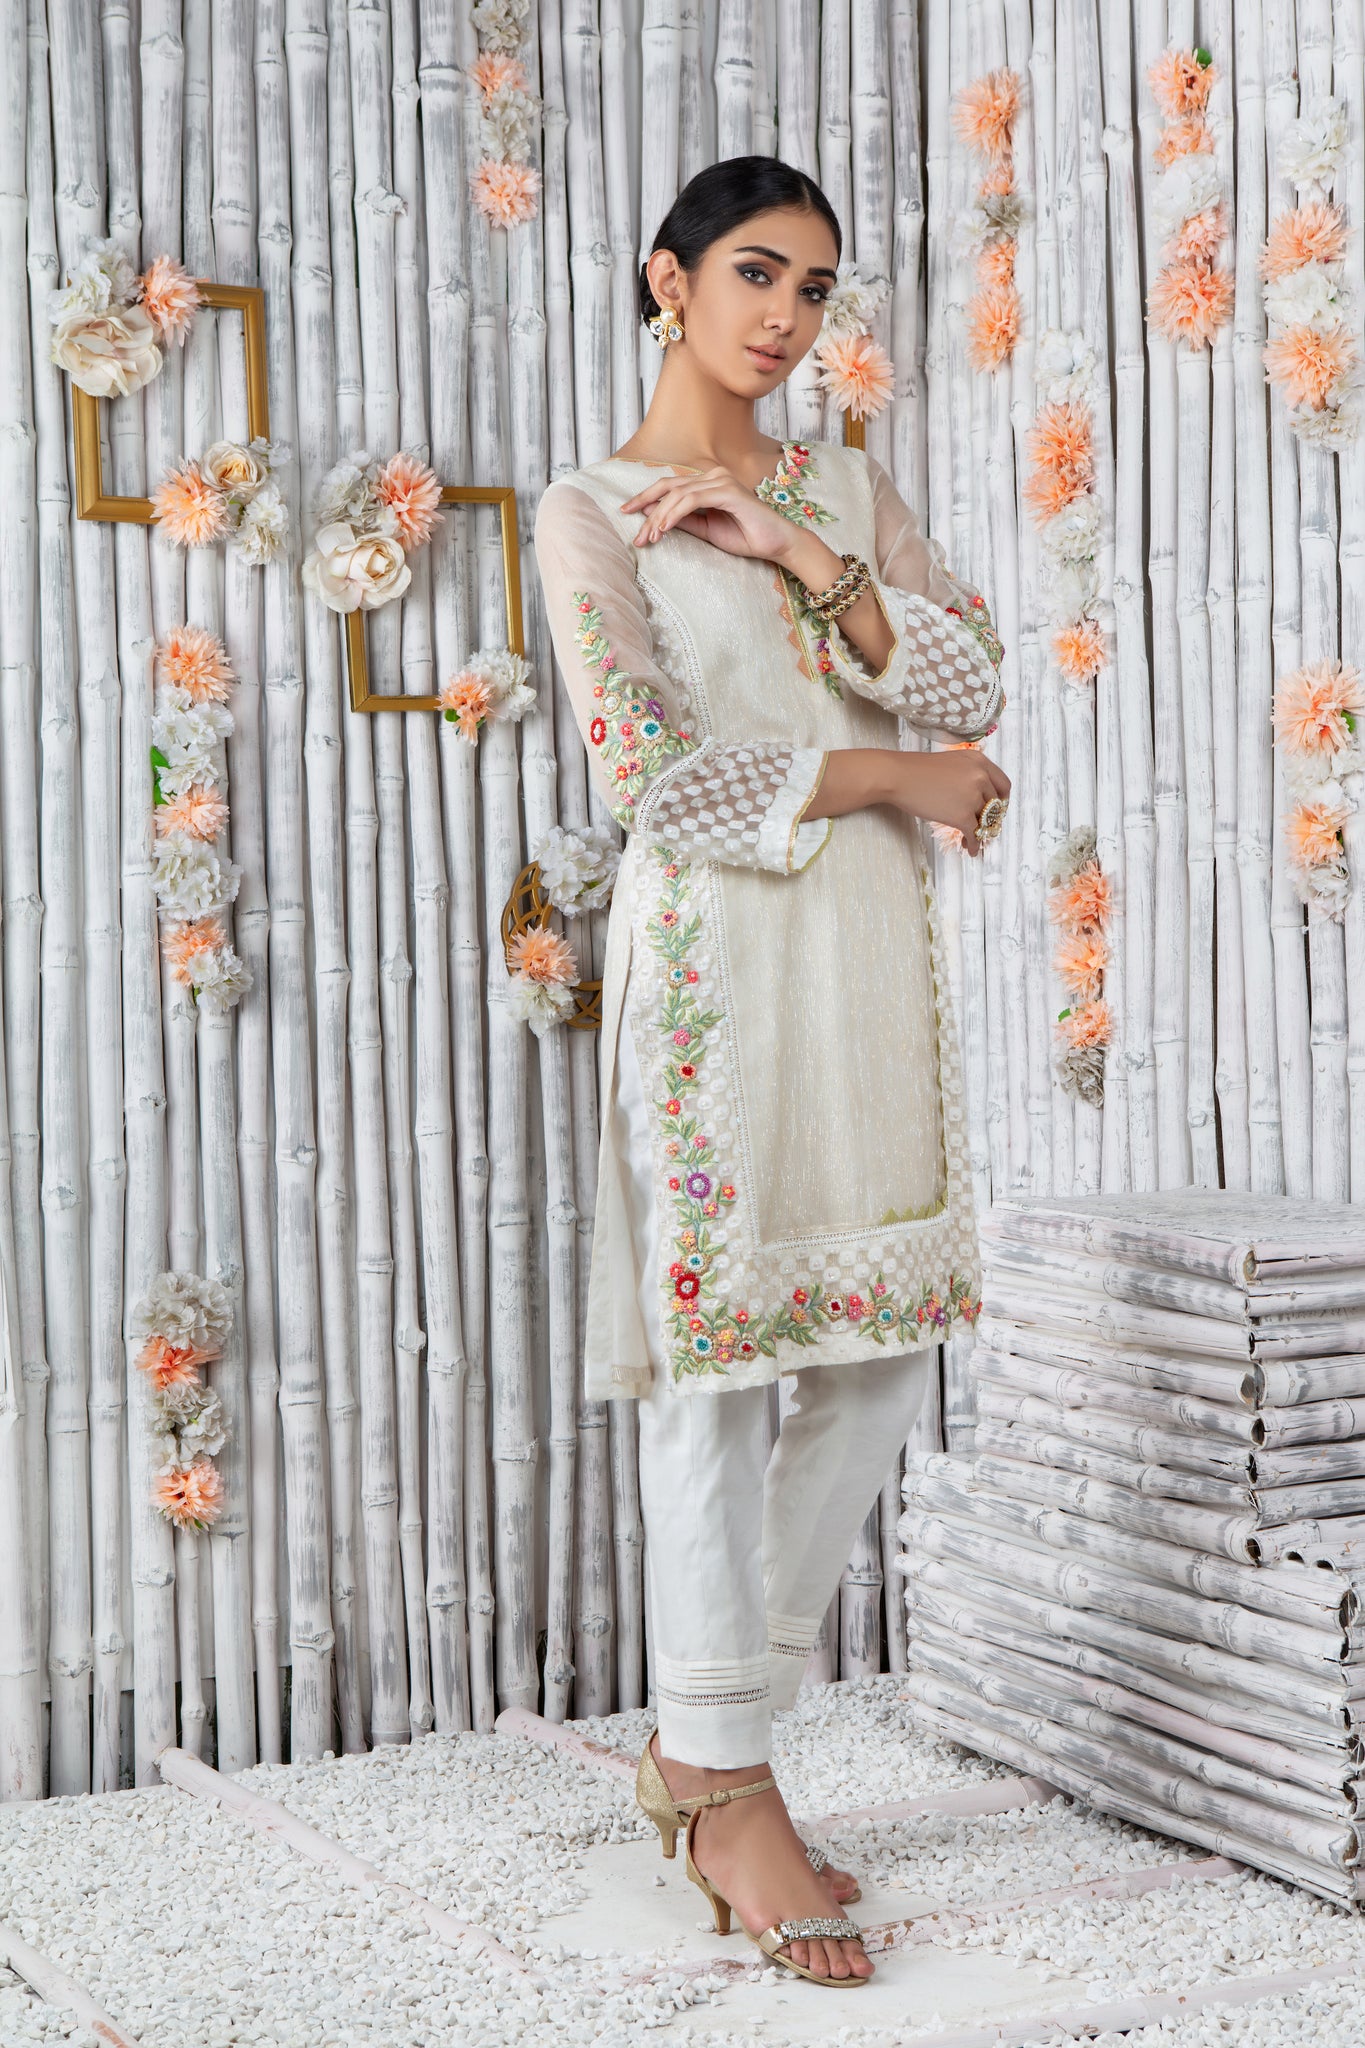 Blossom | Pakistani Designer Outfit | Sarosh Salman